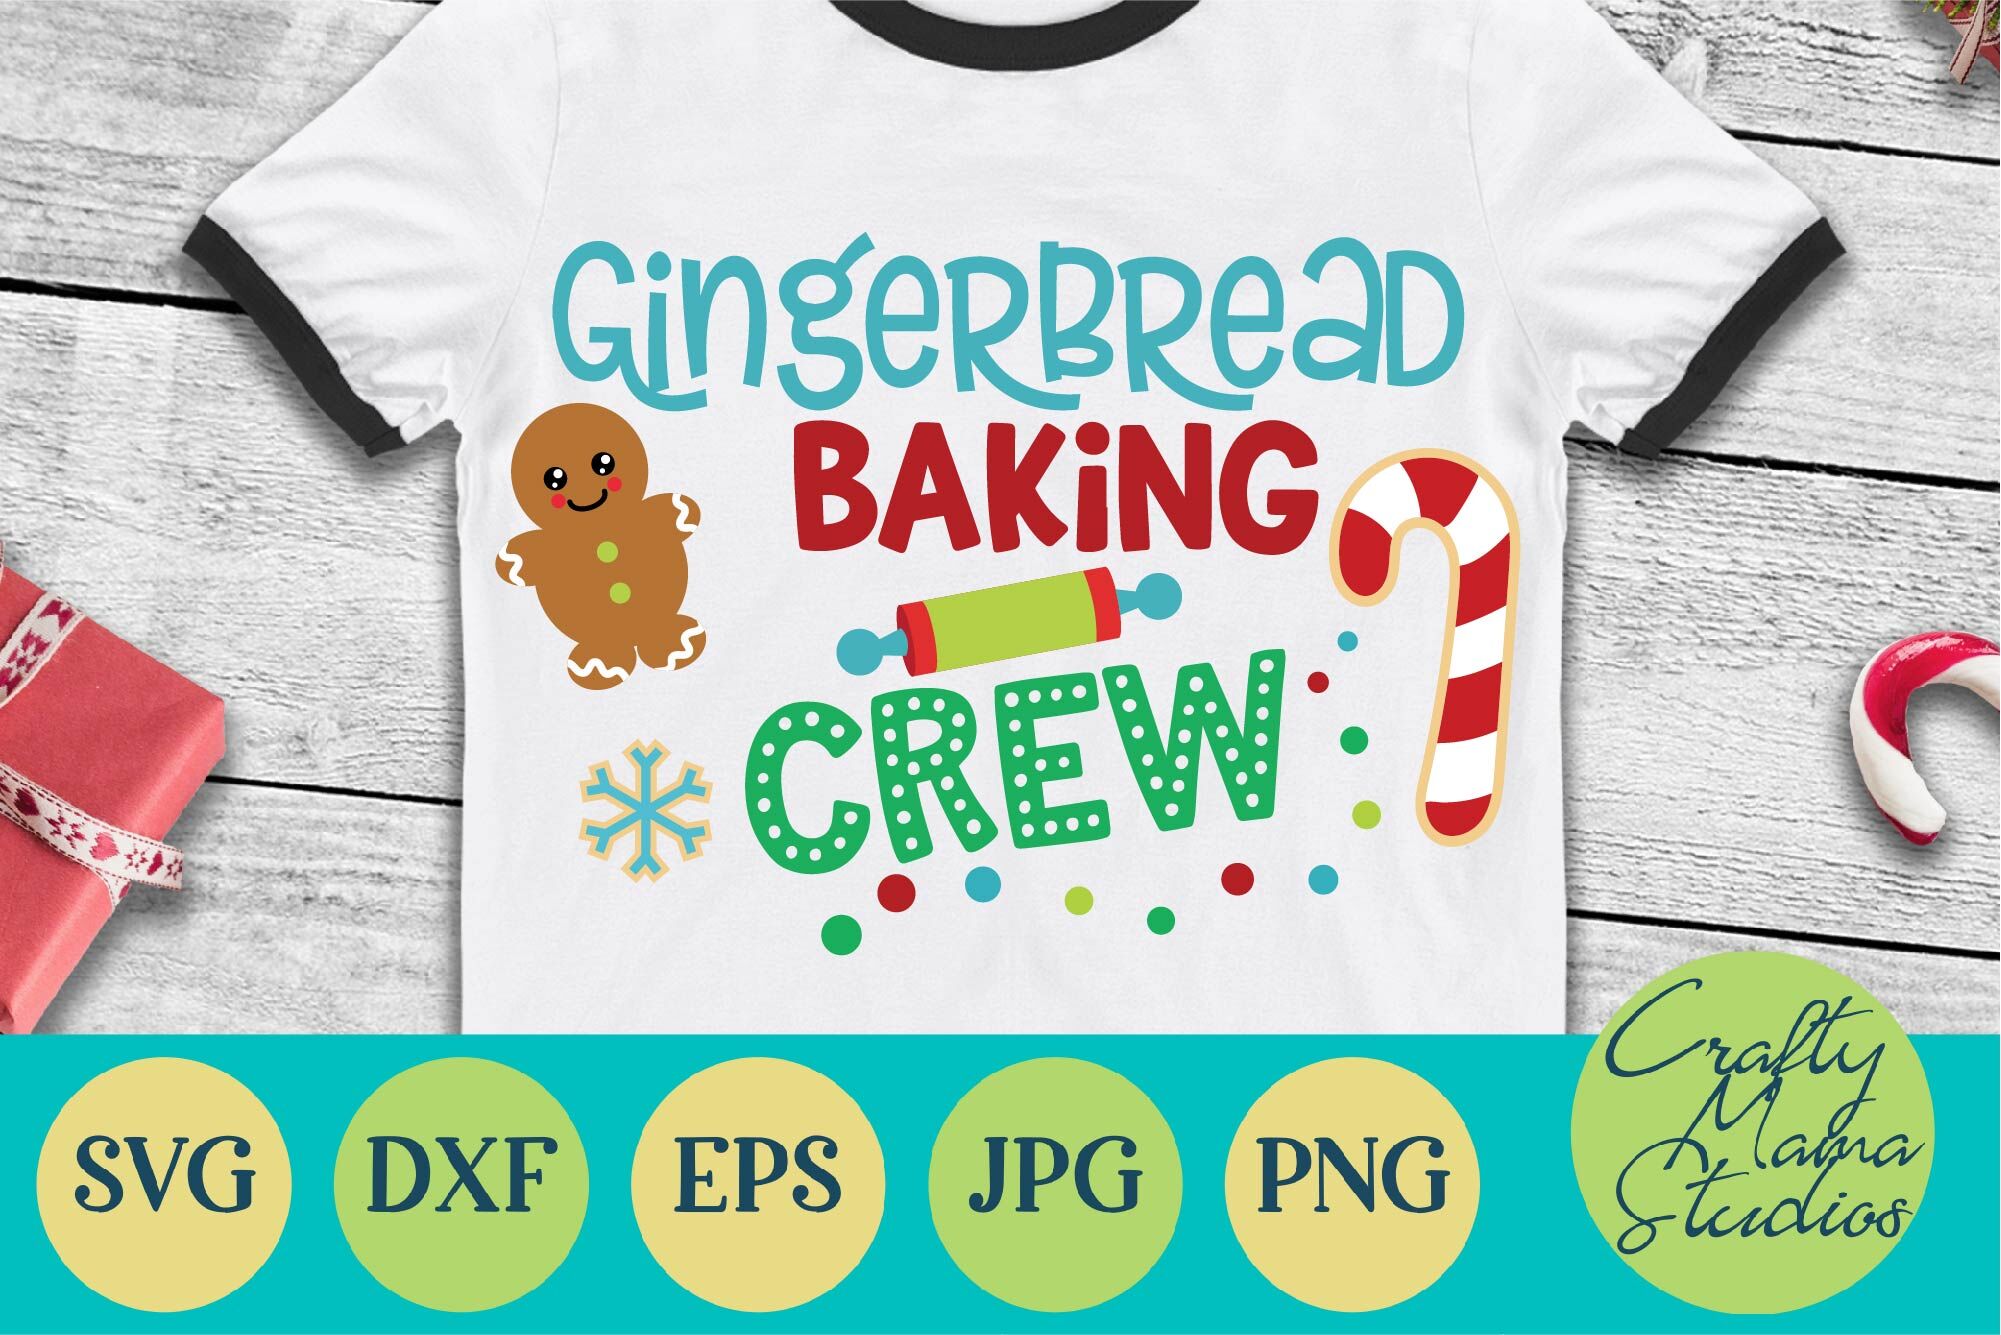 Gingerbread Baking Crew Svg Christmas Svg By Crafty Mama Studios Thehungryjpeg Com